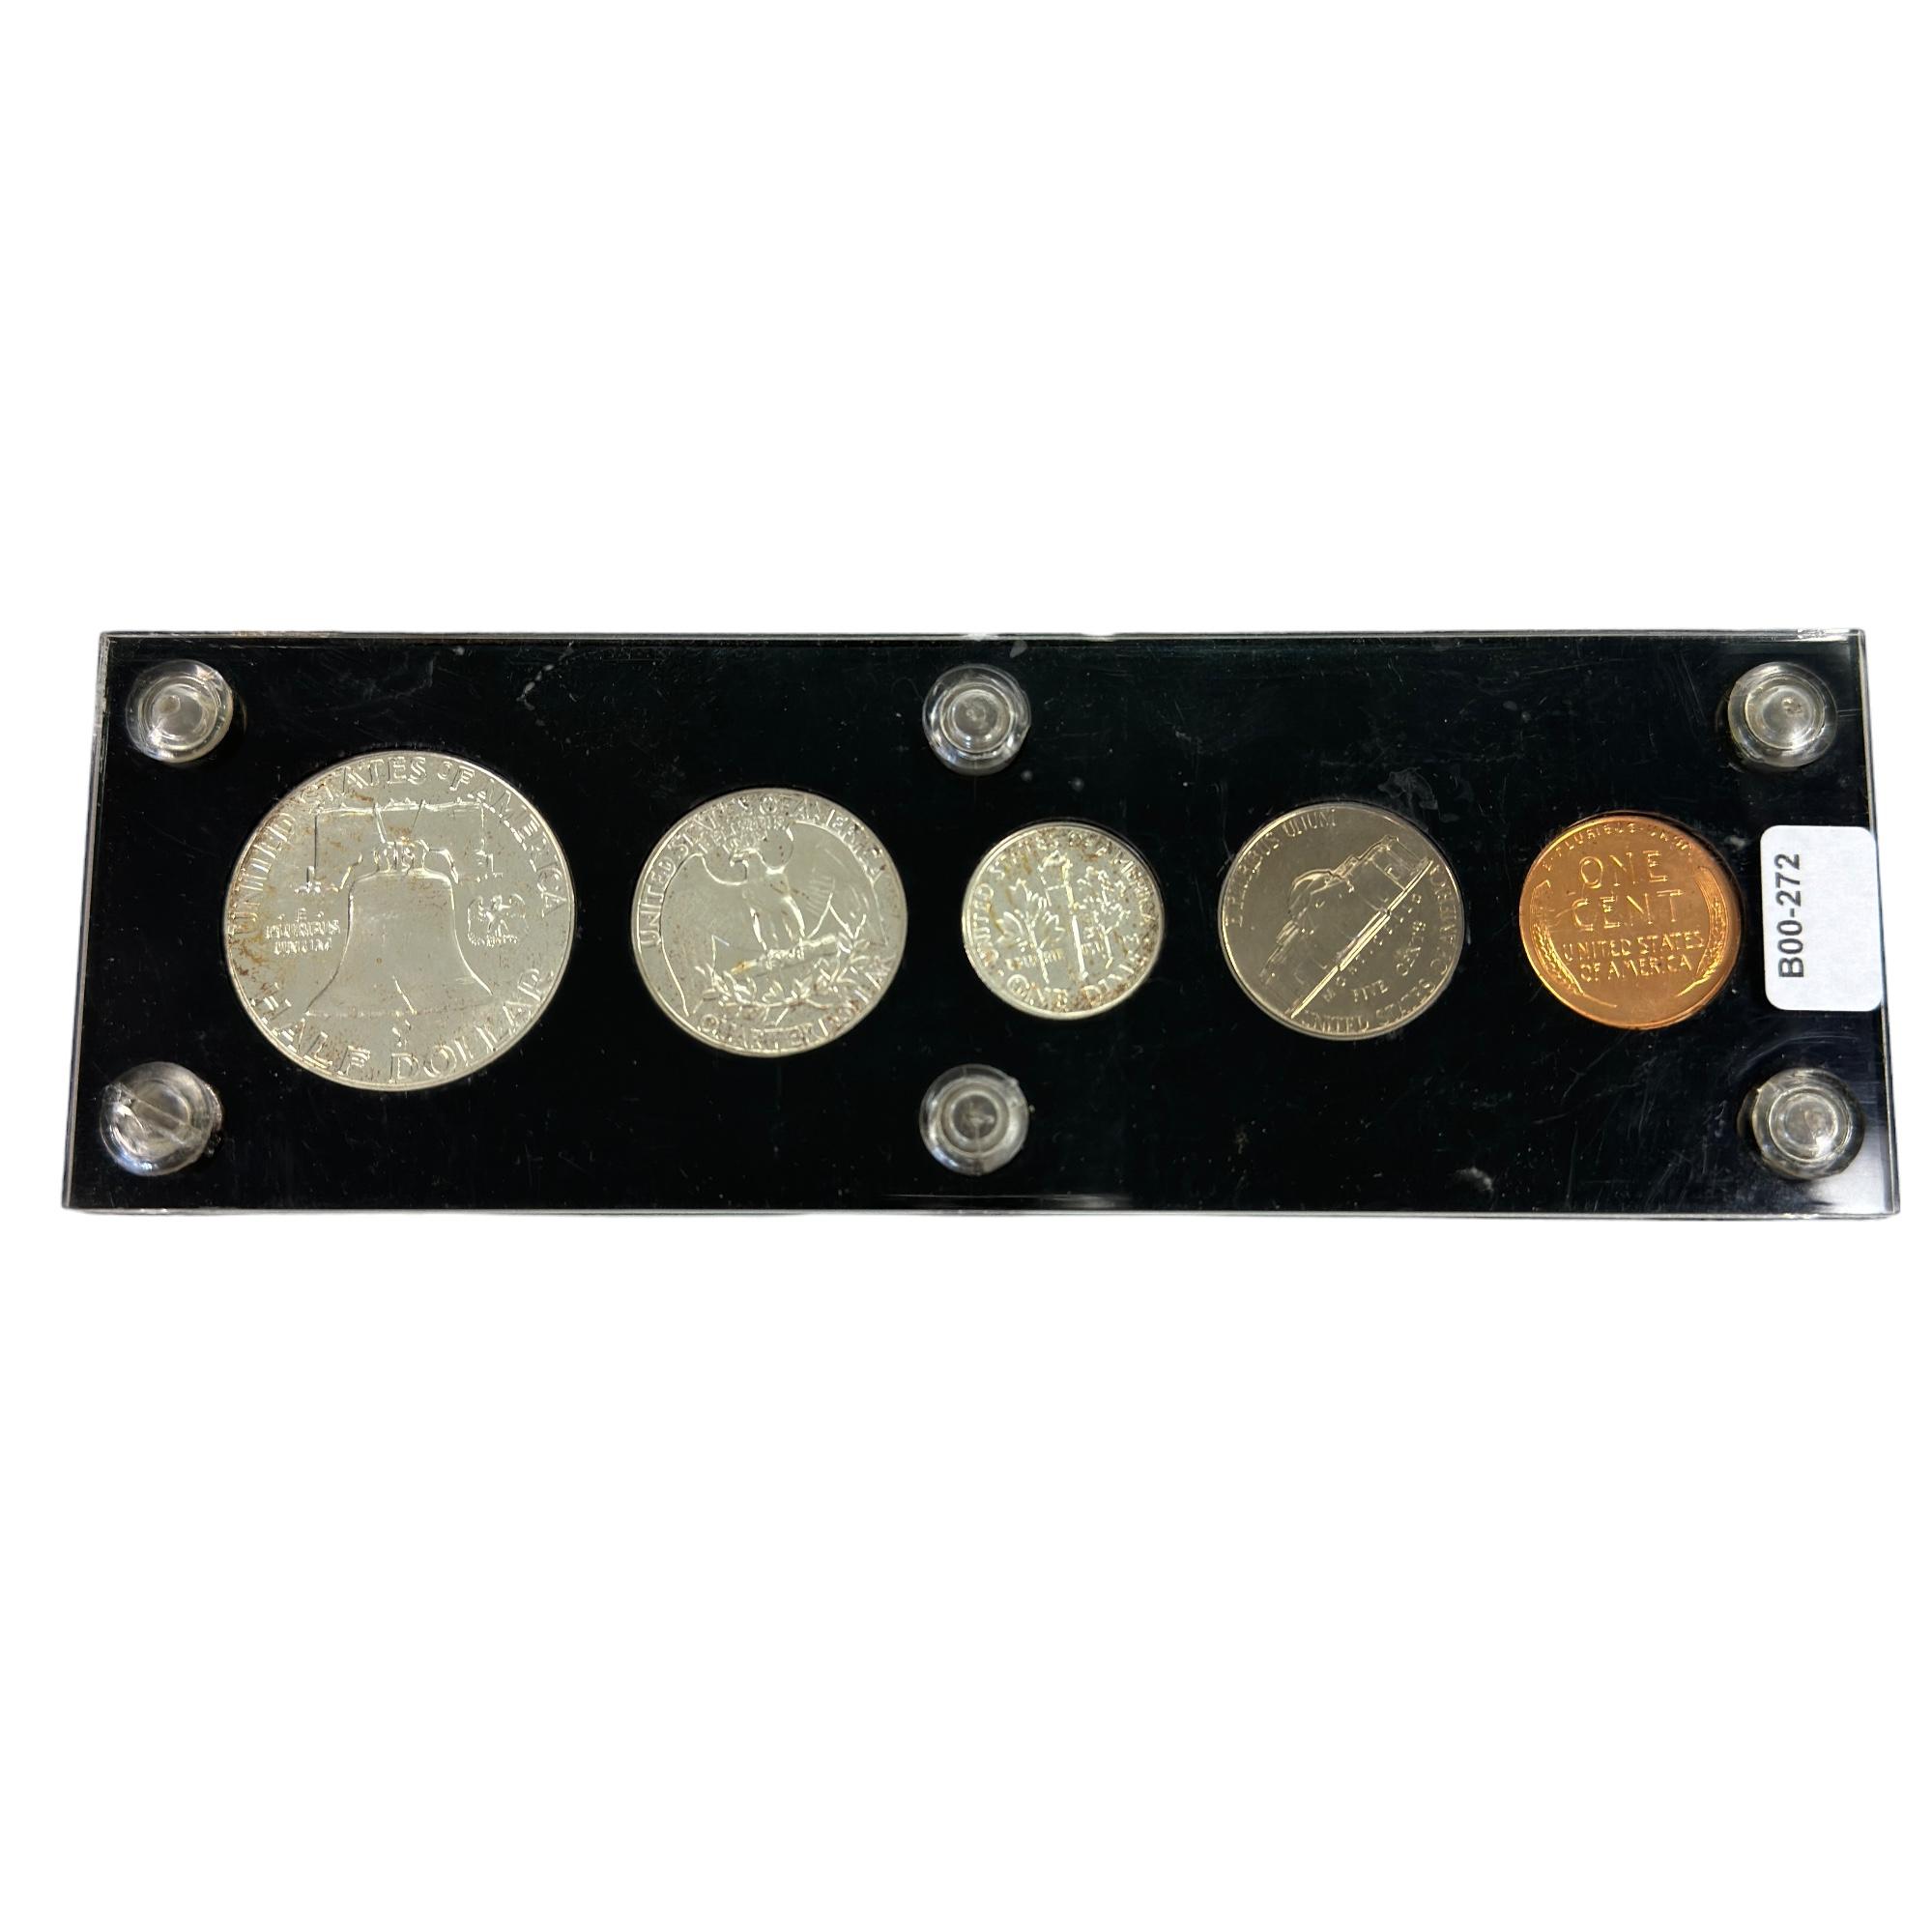 1955 U.S. 5-piece proof set in a Capital Plastics holder